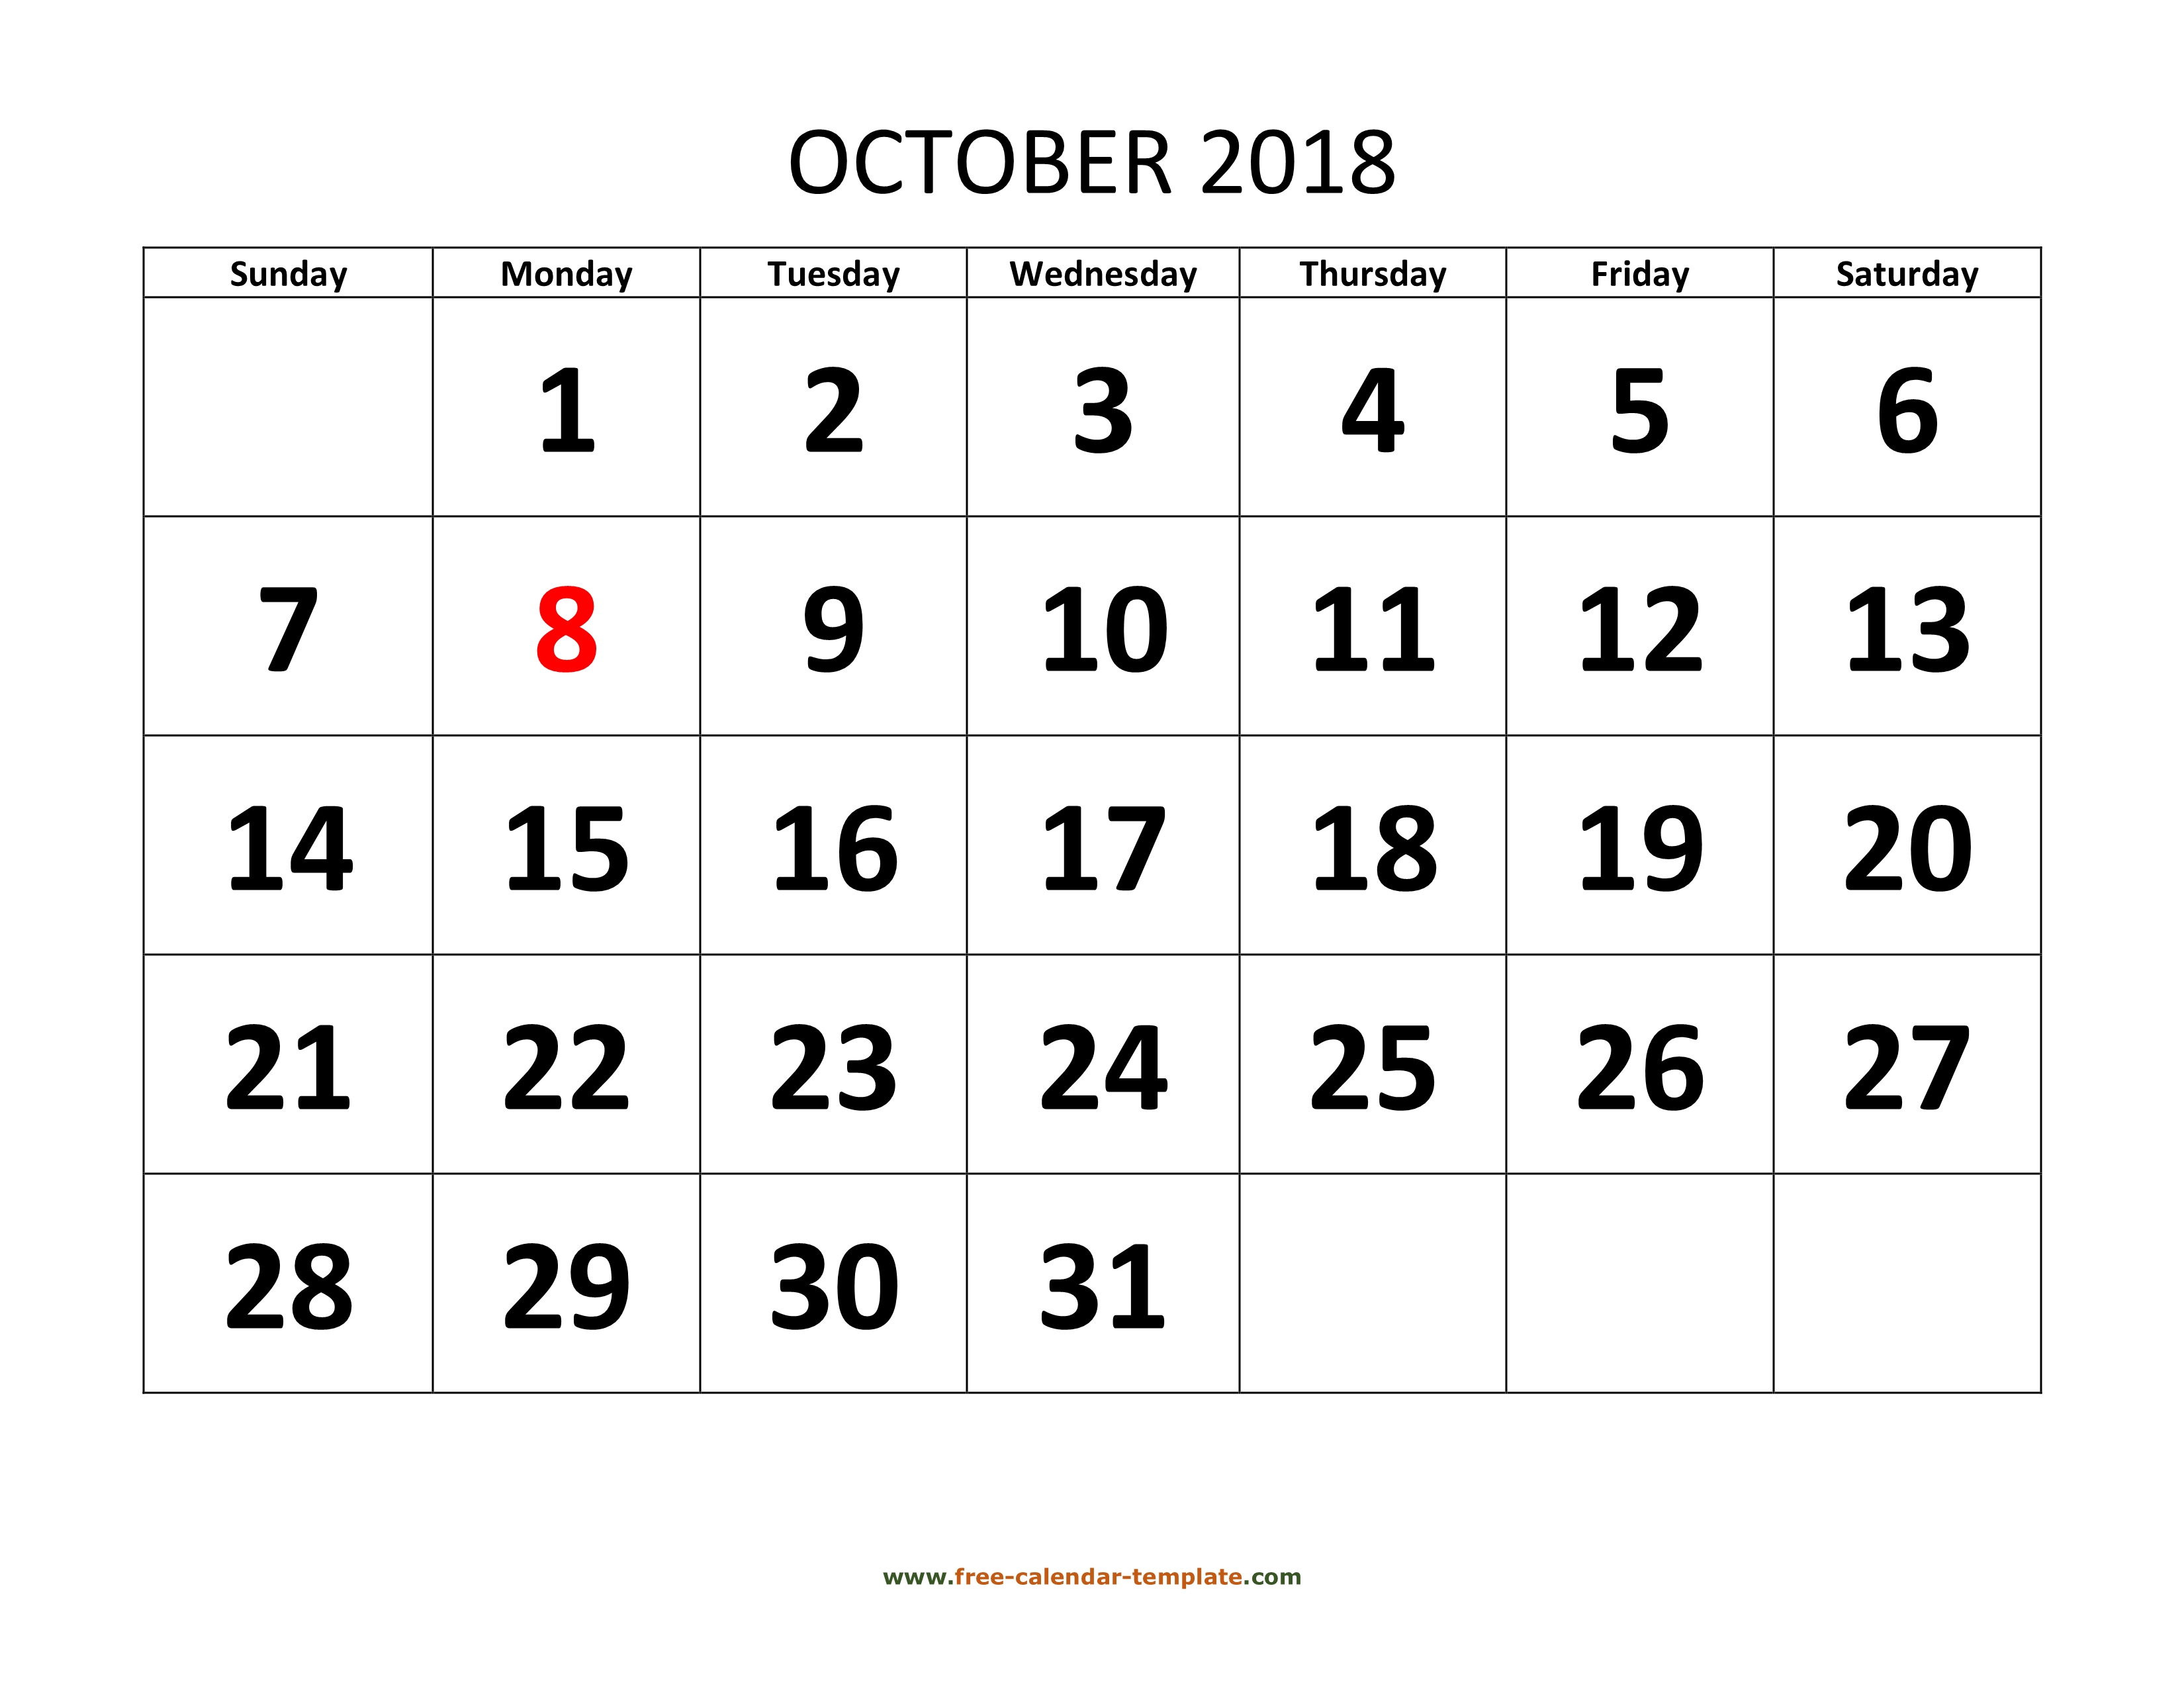 october-2018-calendar-with-holidays-canada-calendar-word-excel